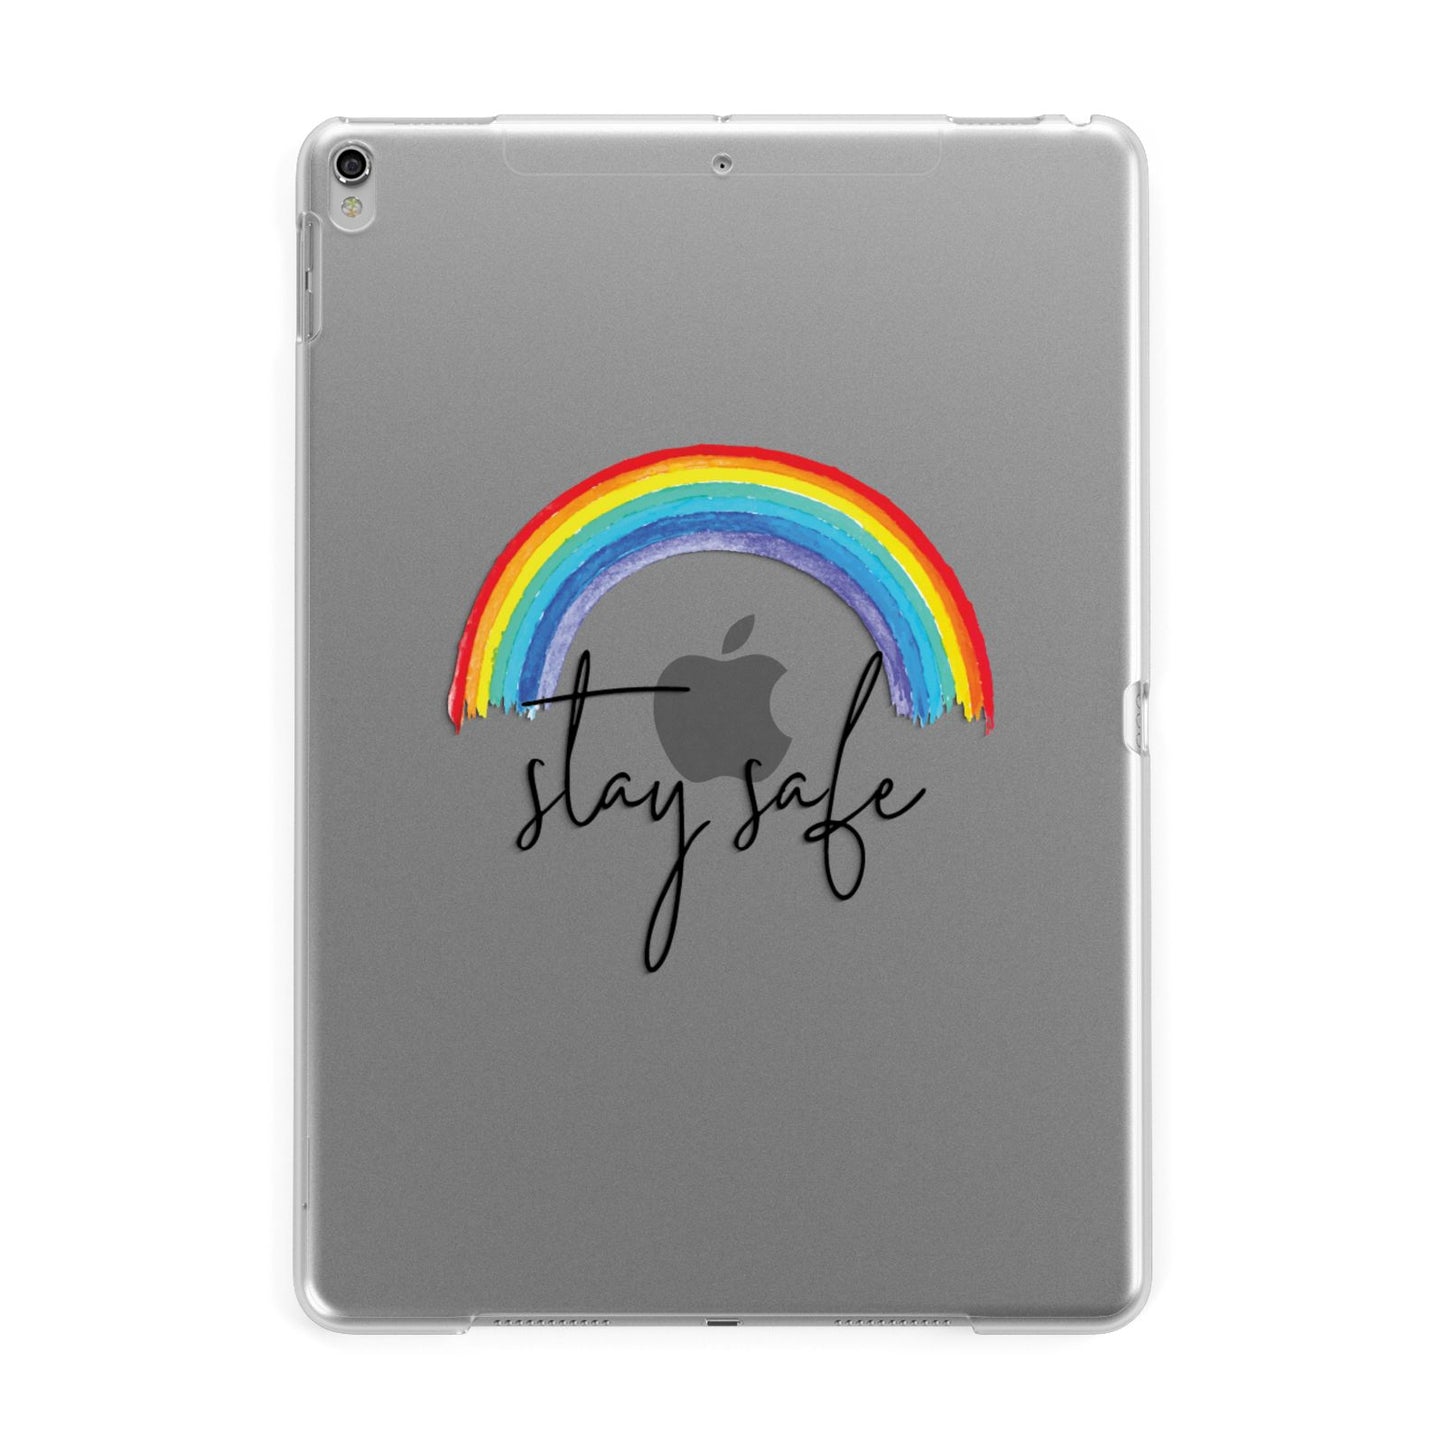 Stay Safe Rainbow Apple iPad Silver Case